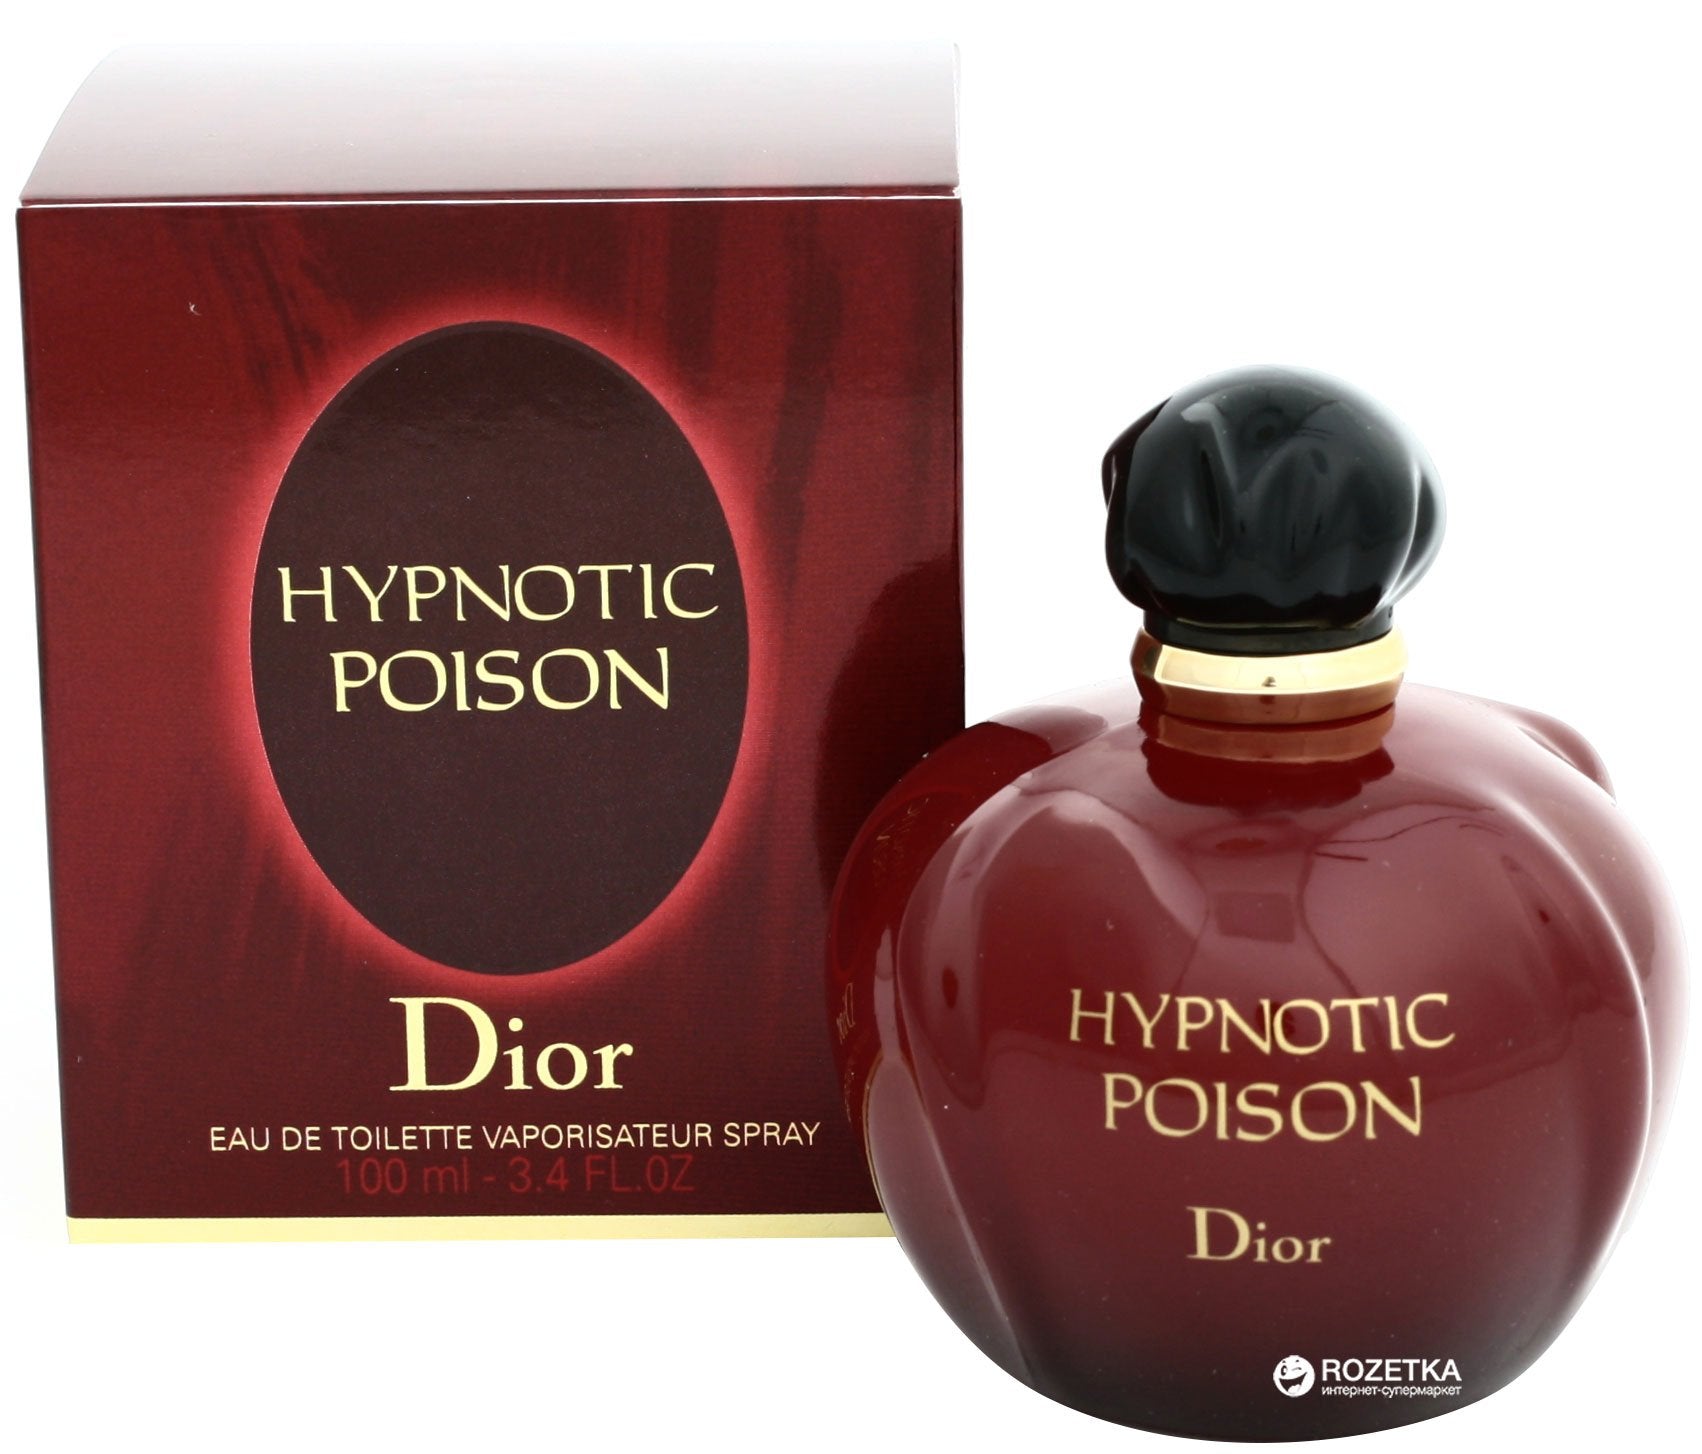 Dior Hypnotic Poison EDT 100ml Perfume – Ritzy Store